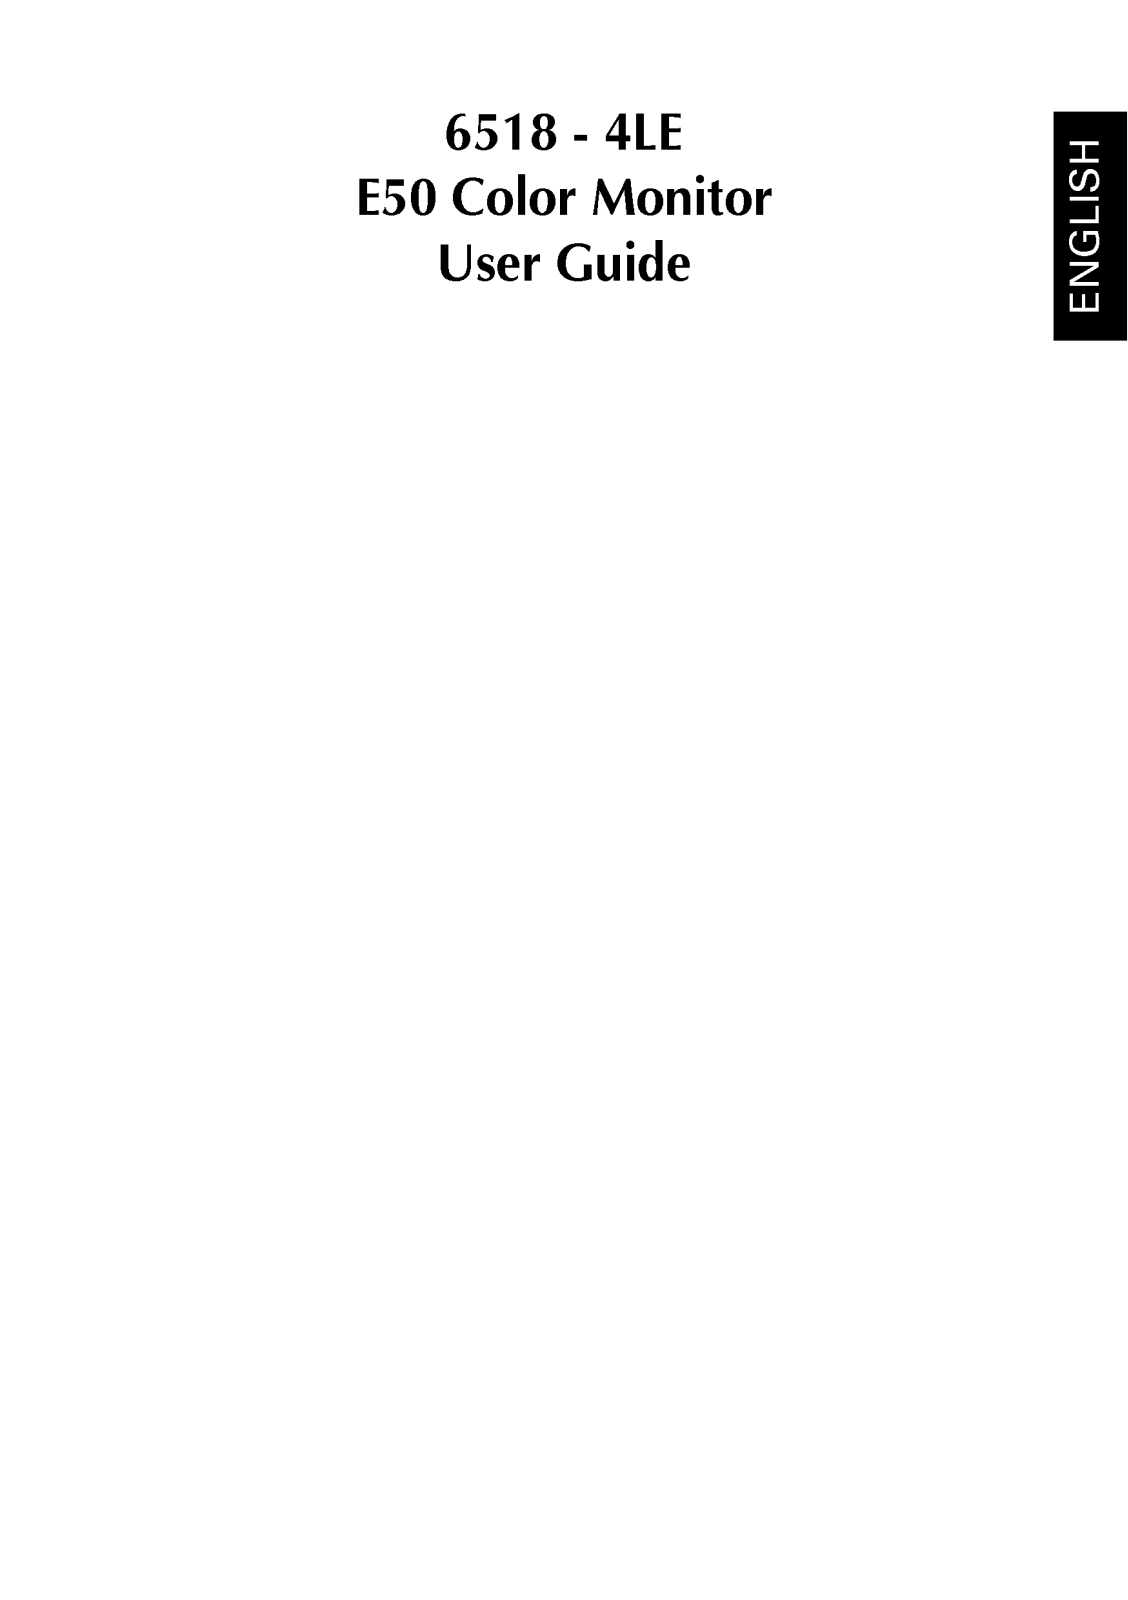 LG E50H User Guide